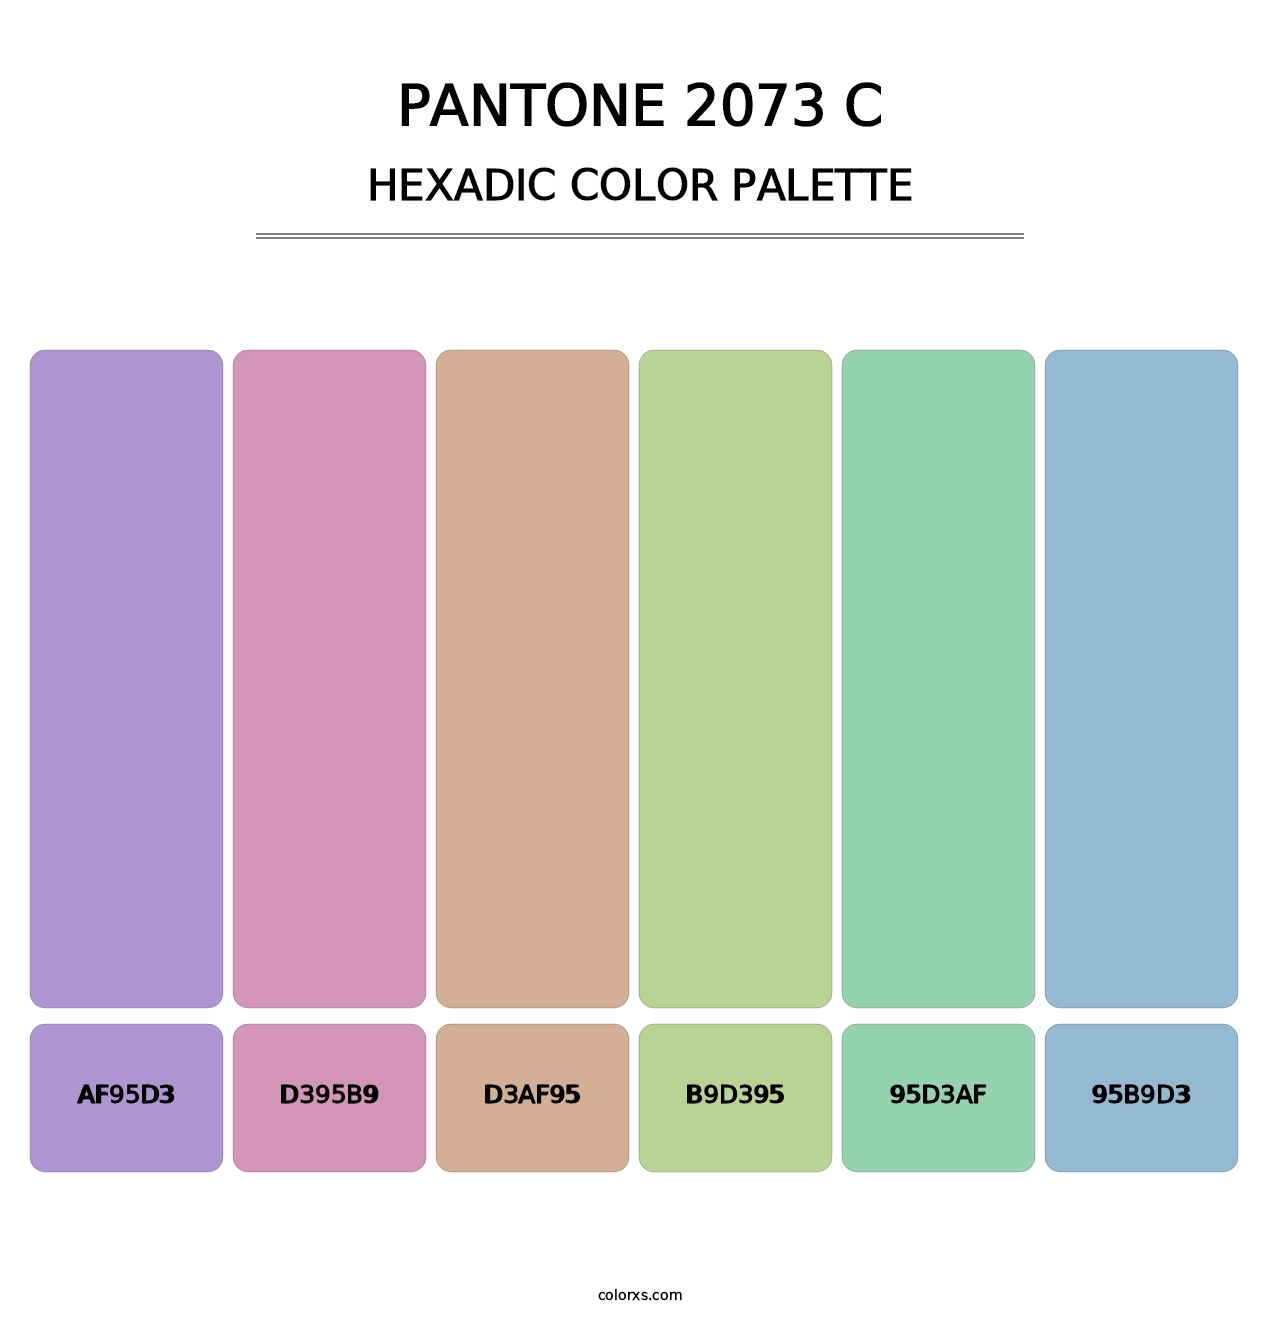 PANTONE 2073 C - Hexadic Color Palette